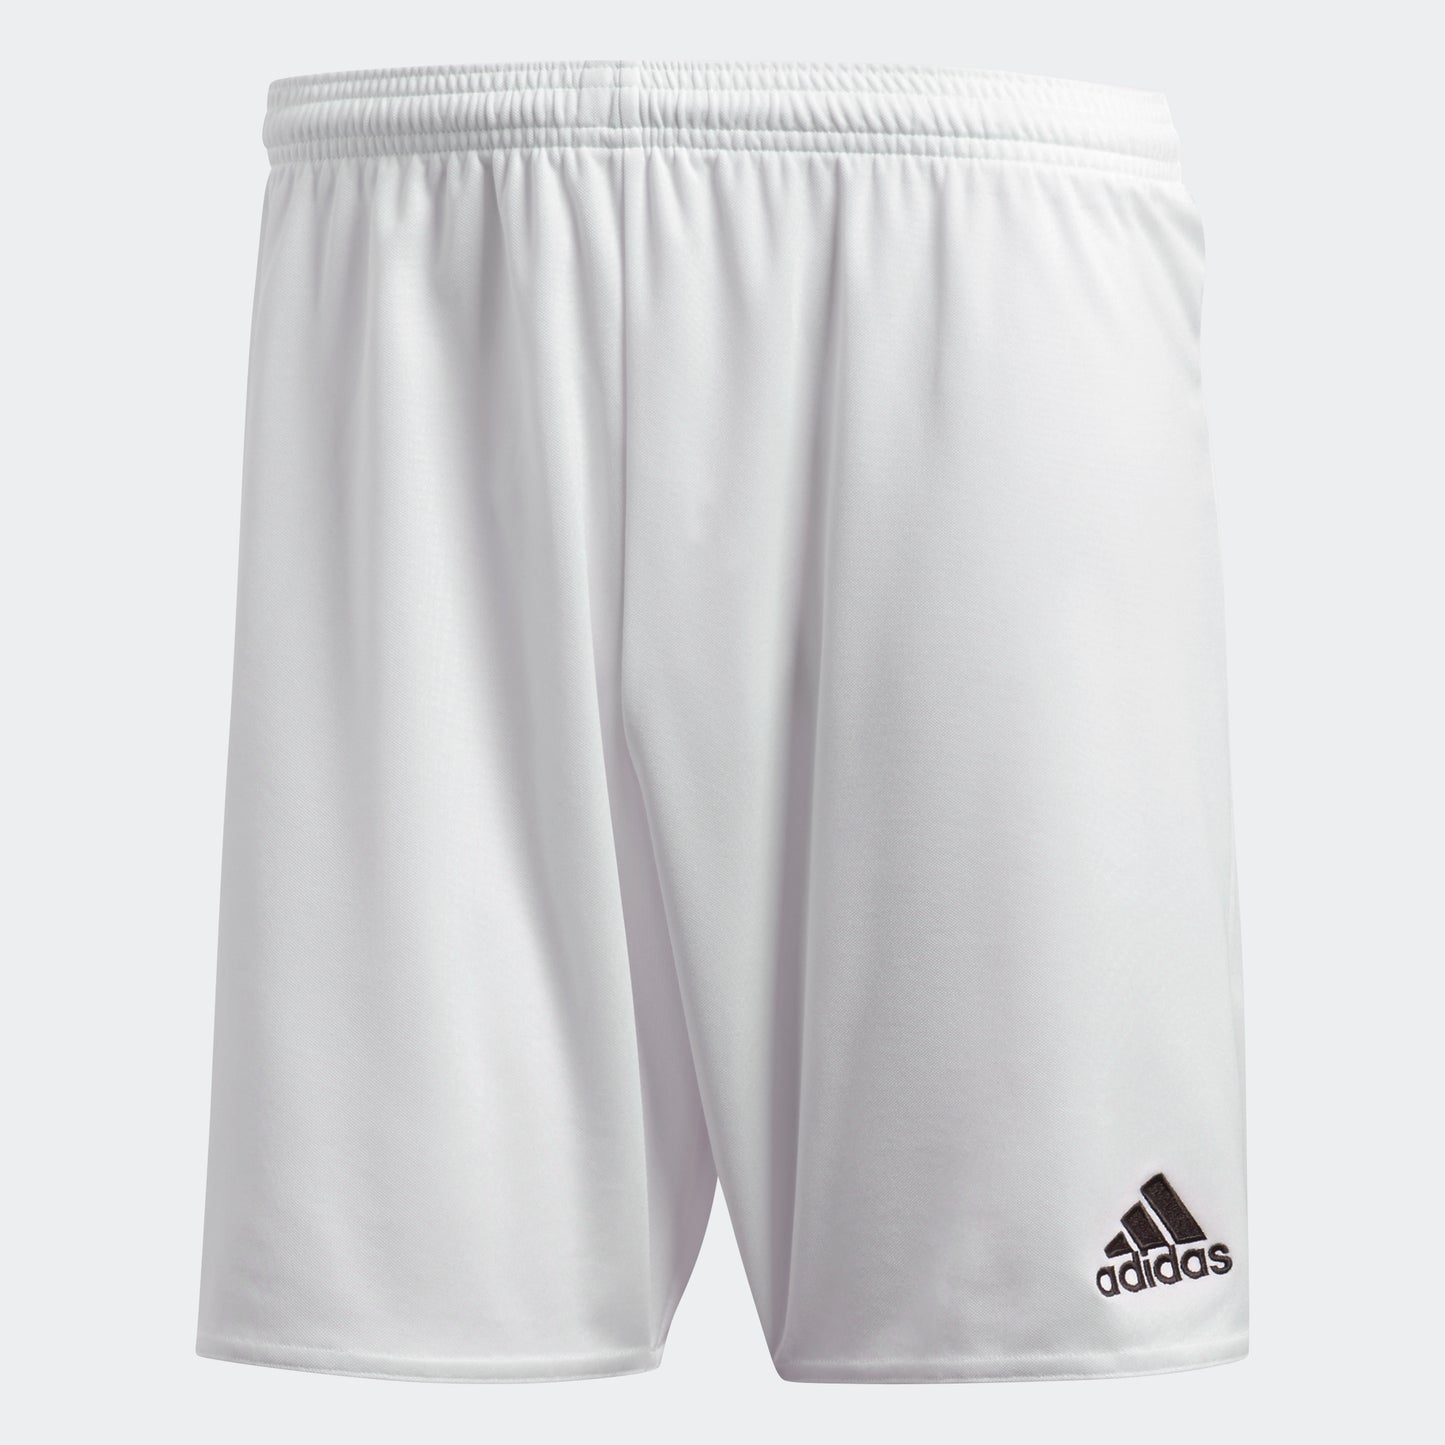 adidas PARMA 16 Shorts | White | Men's